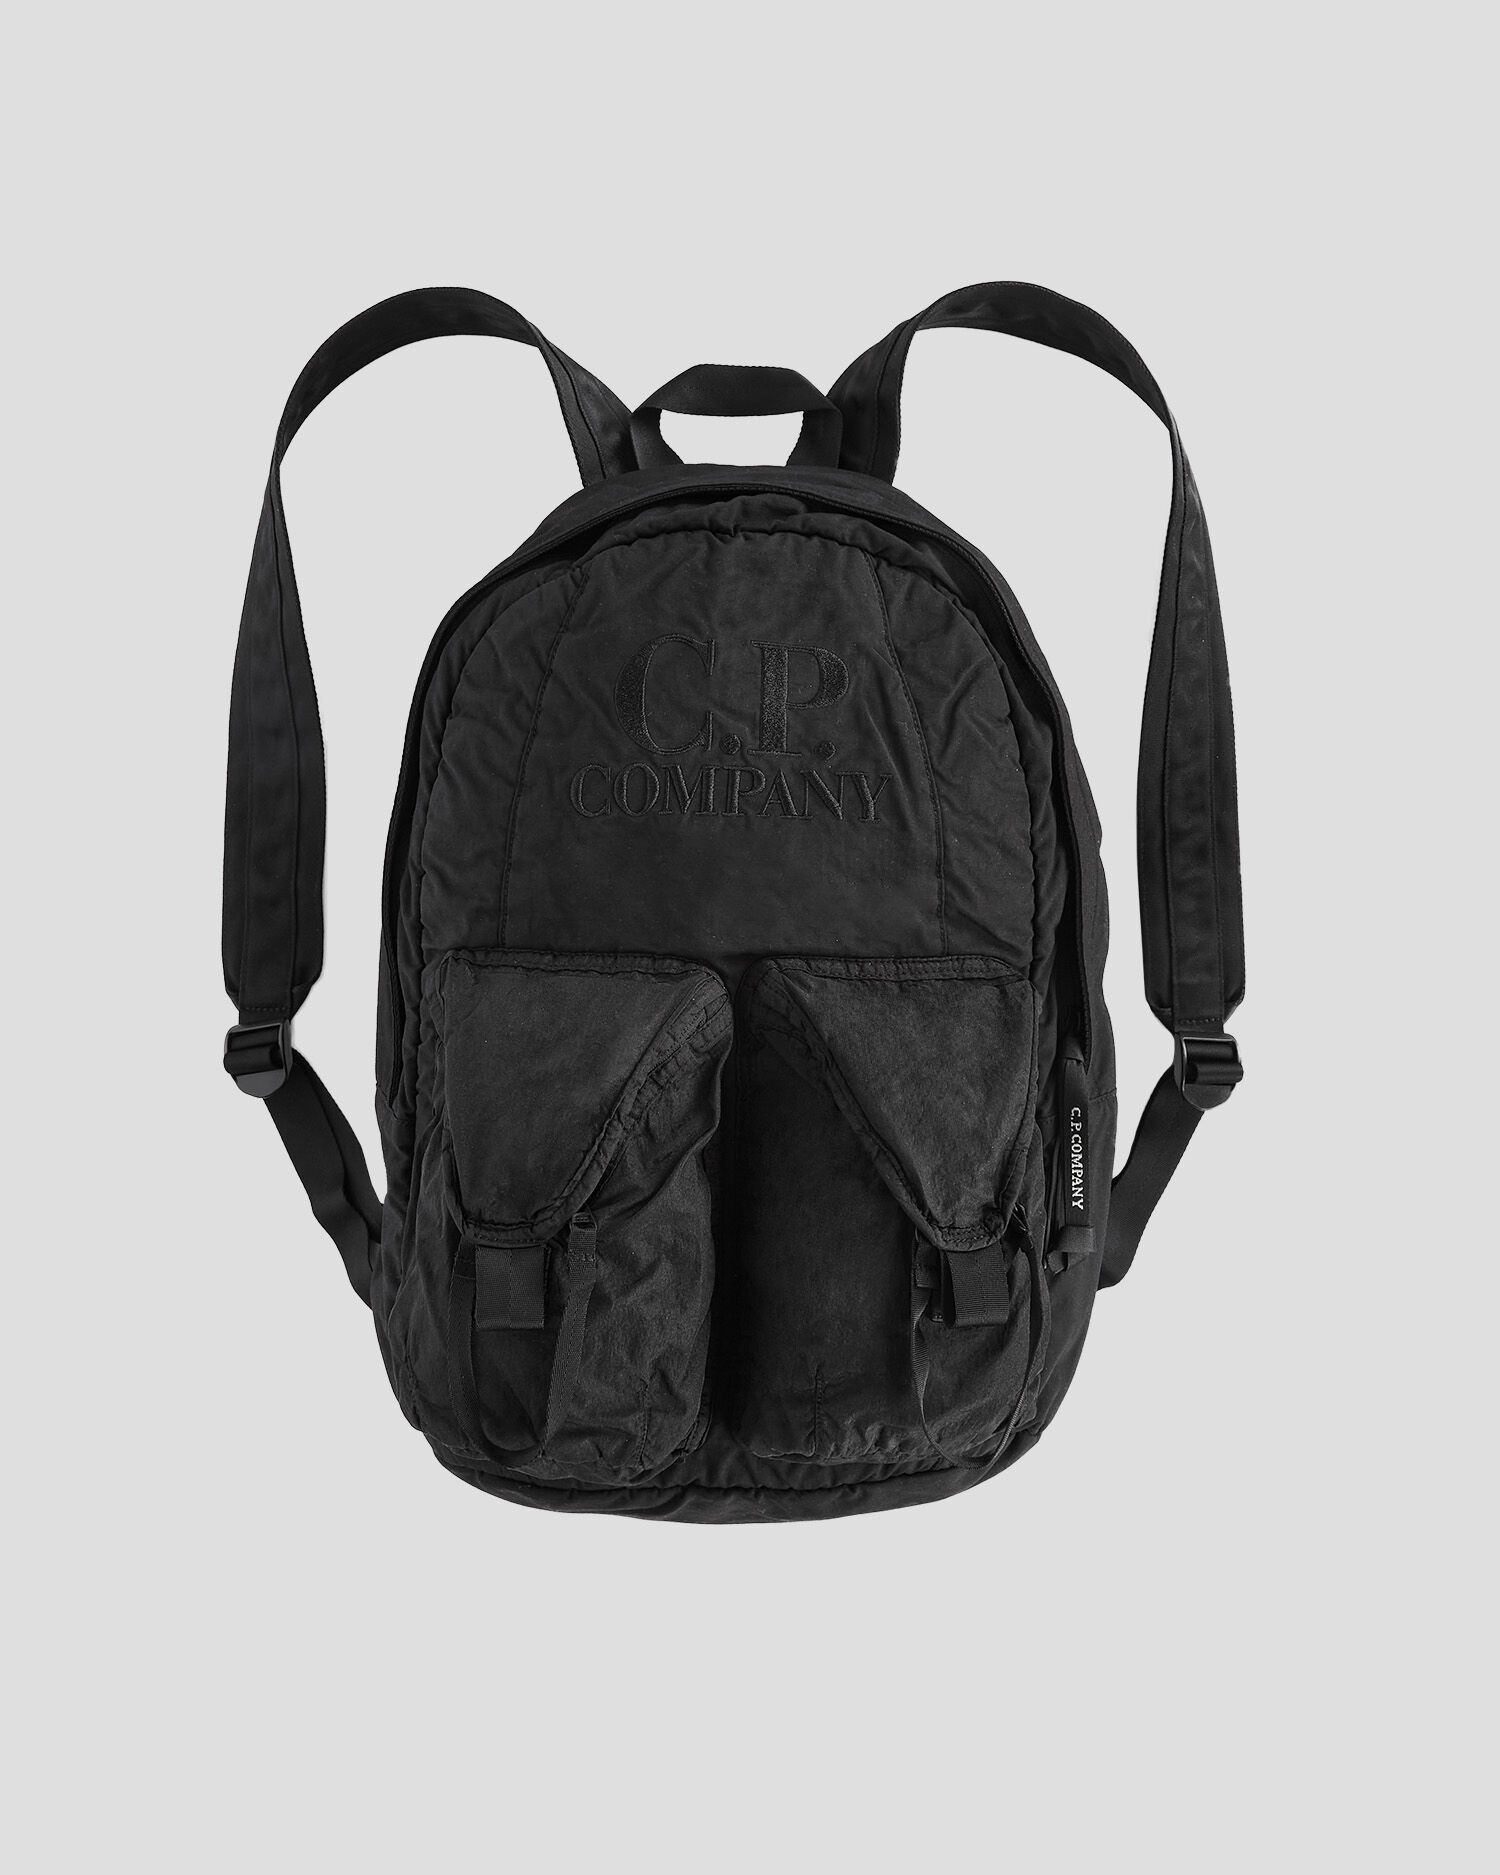 Taylon P Mixed Backpack - 1